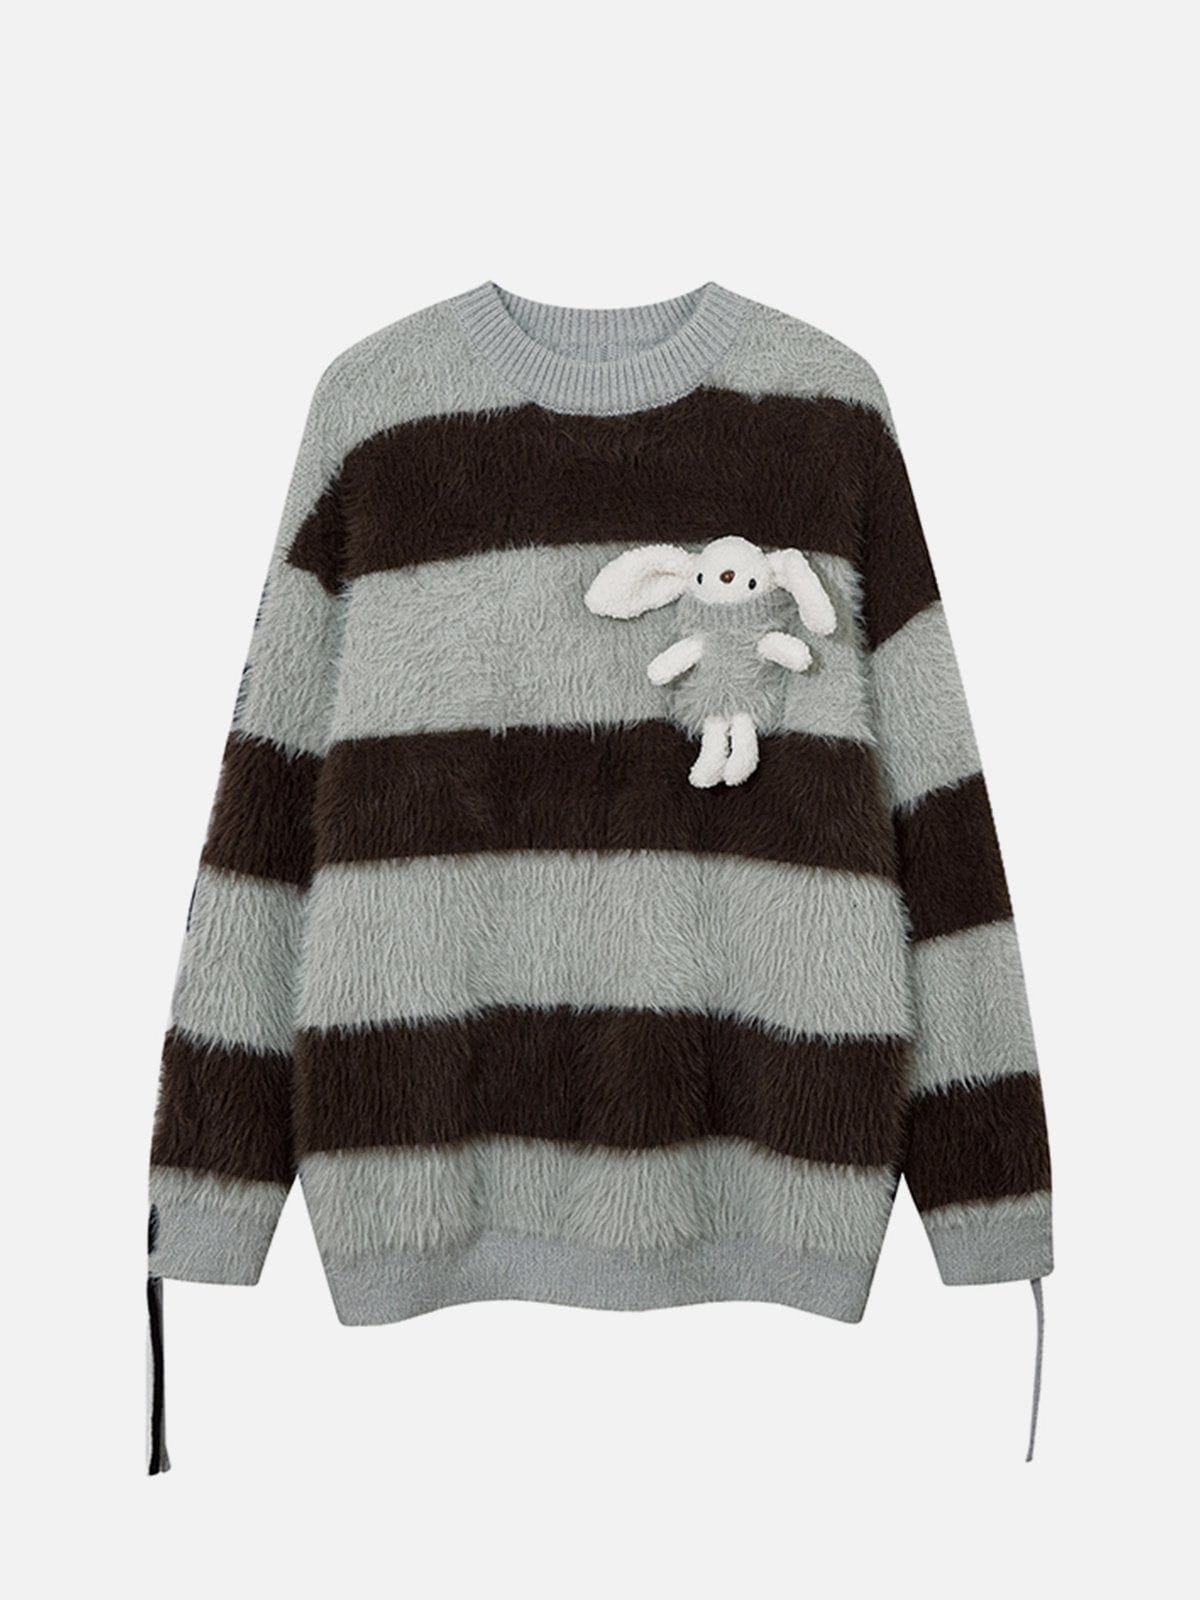 Majesda® - Cute Rabbit Stripe Mohair Sweater outfit ideas streetwear fashion